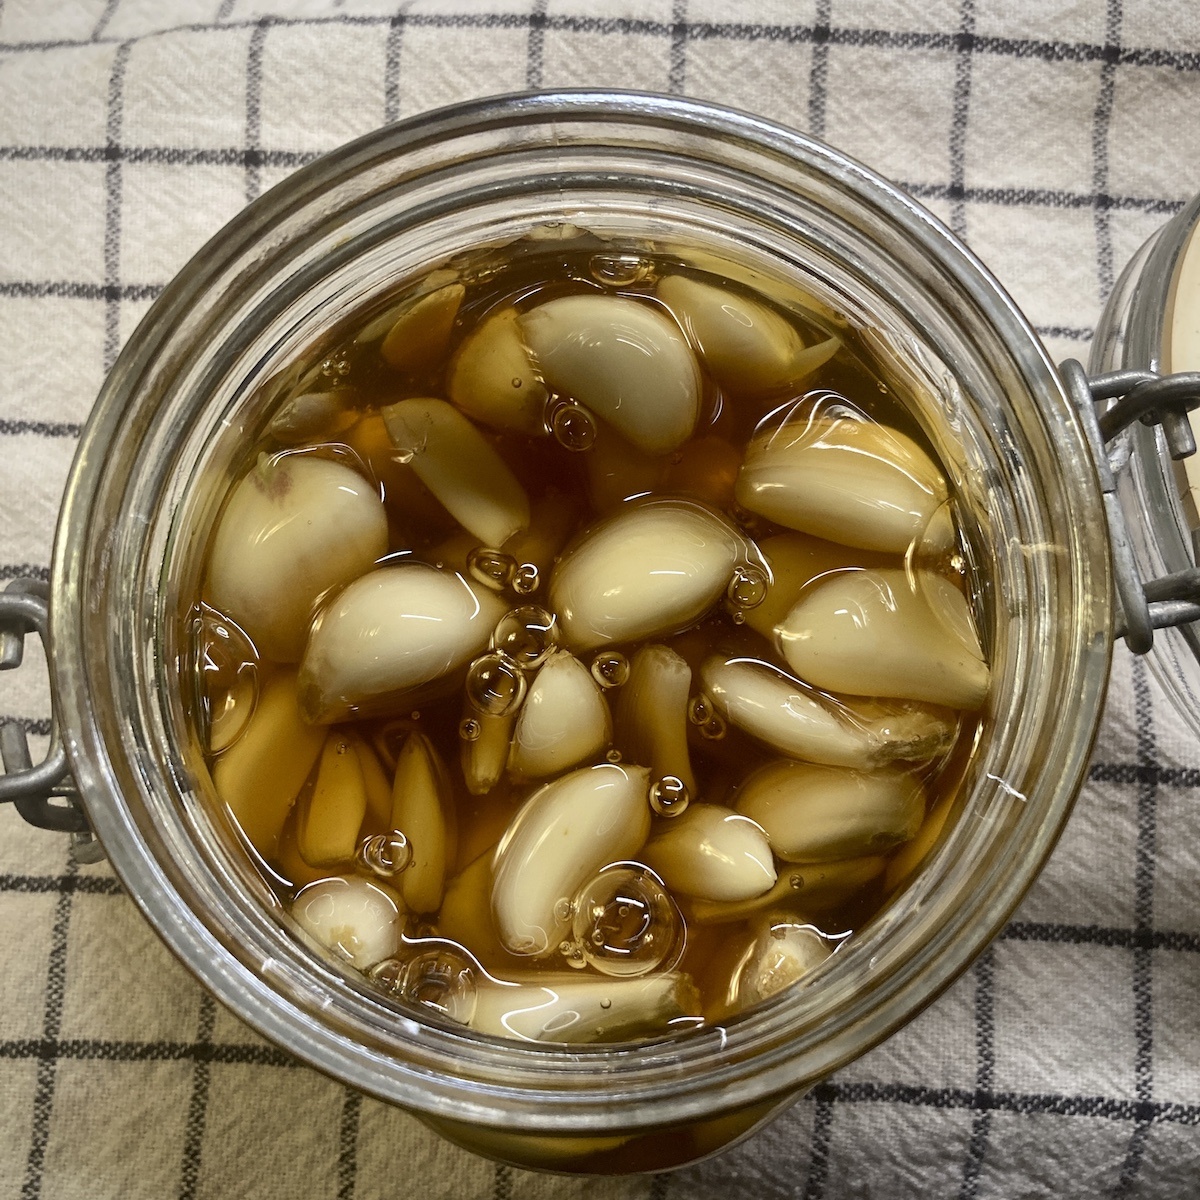 Honey Fermented Garlic Recipe